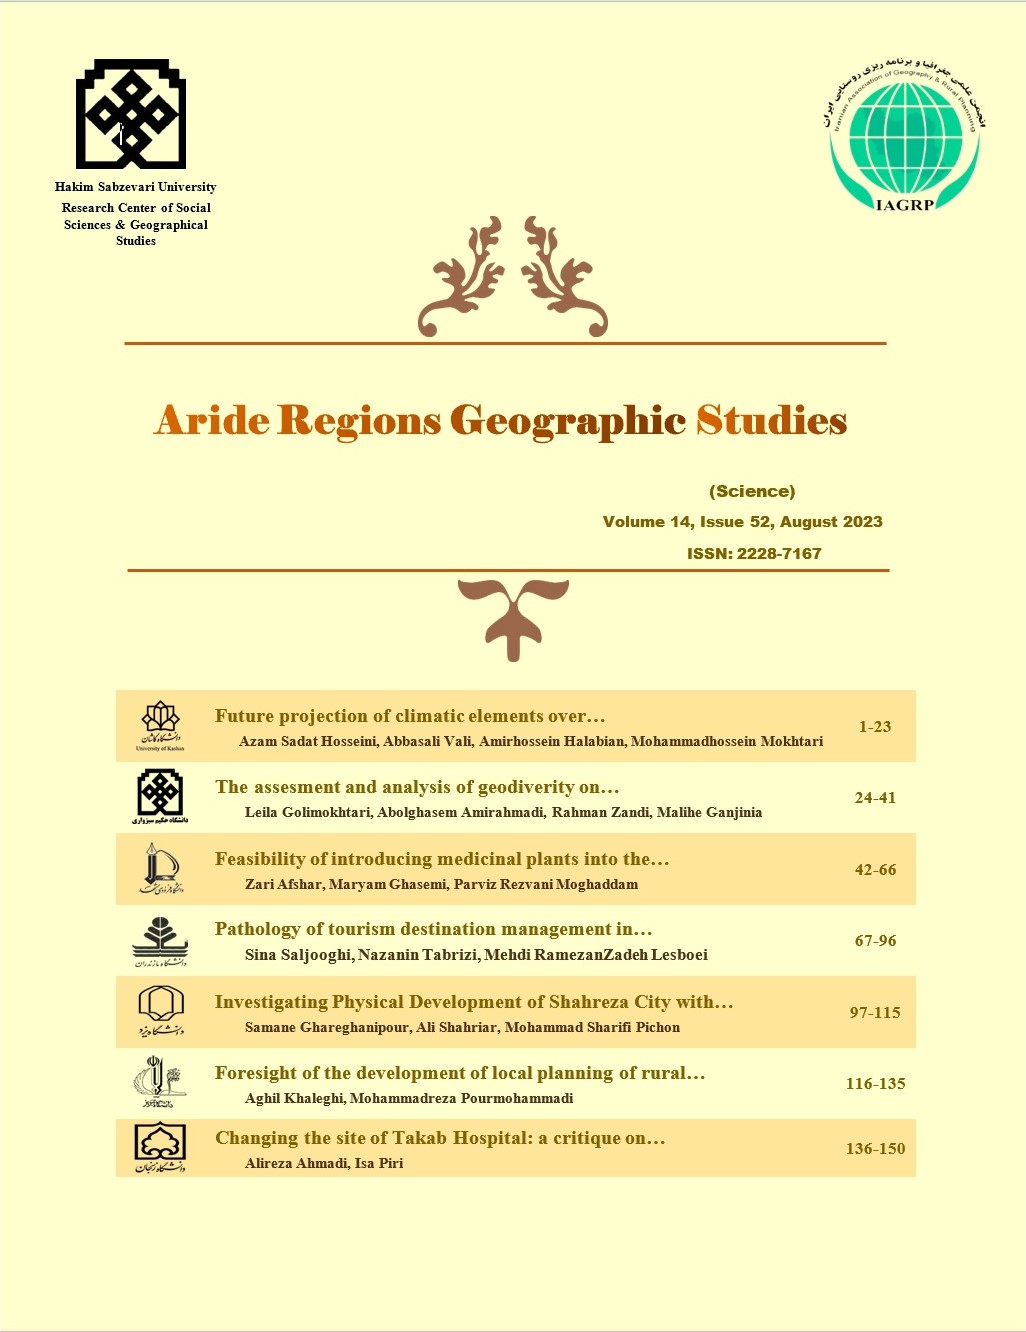 Journal of Arid Regions Geographic Studies